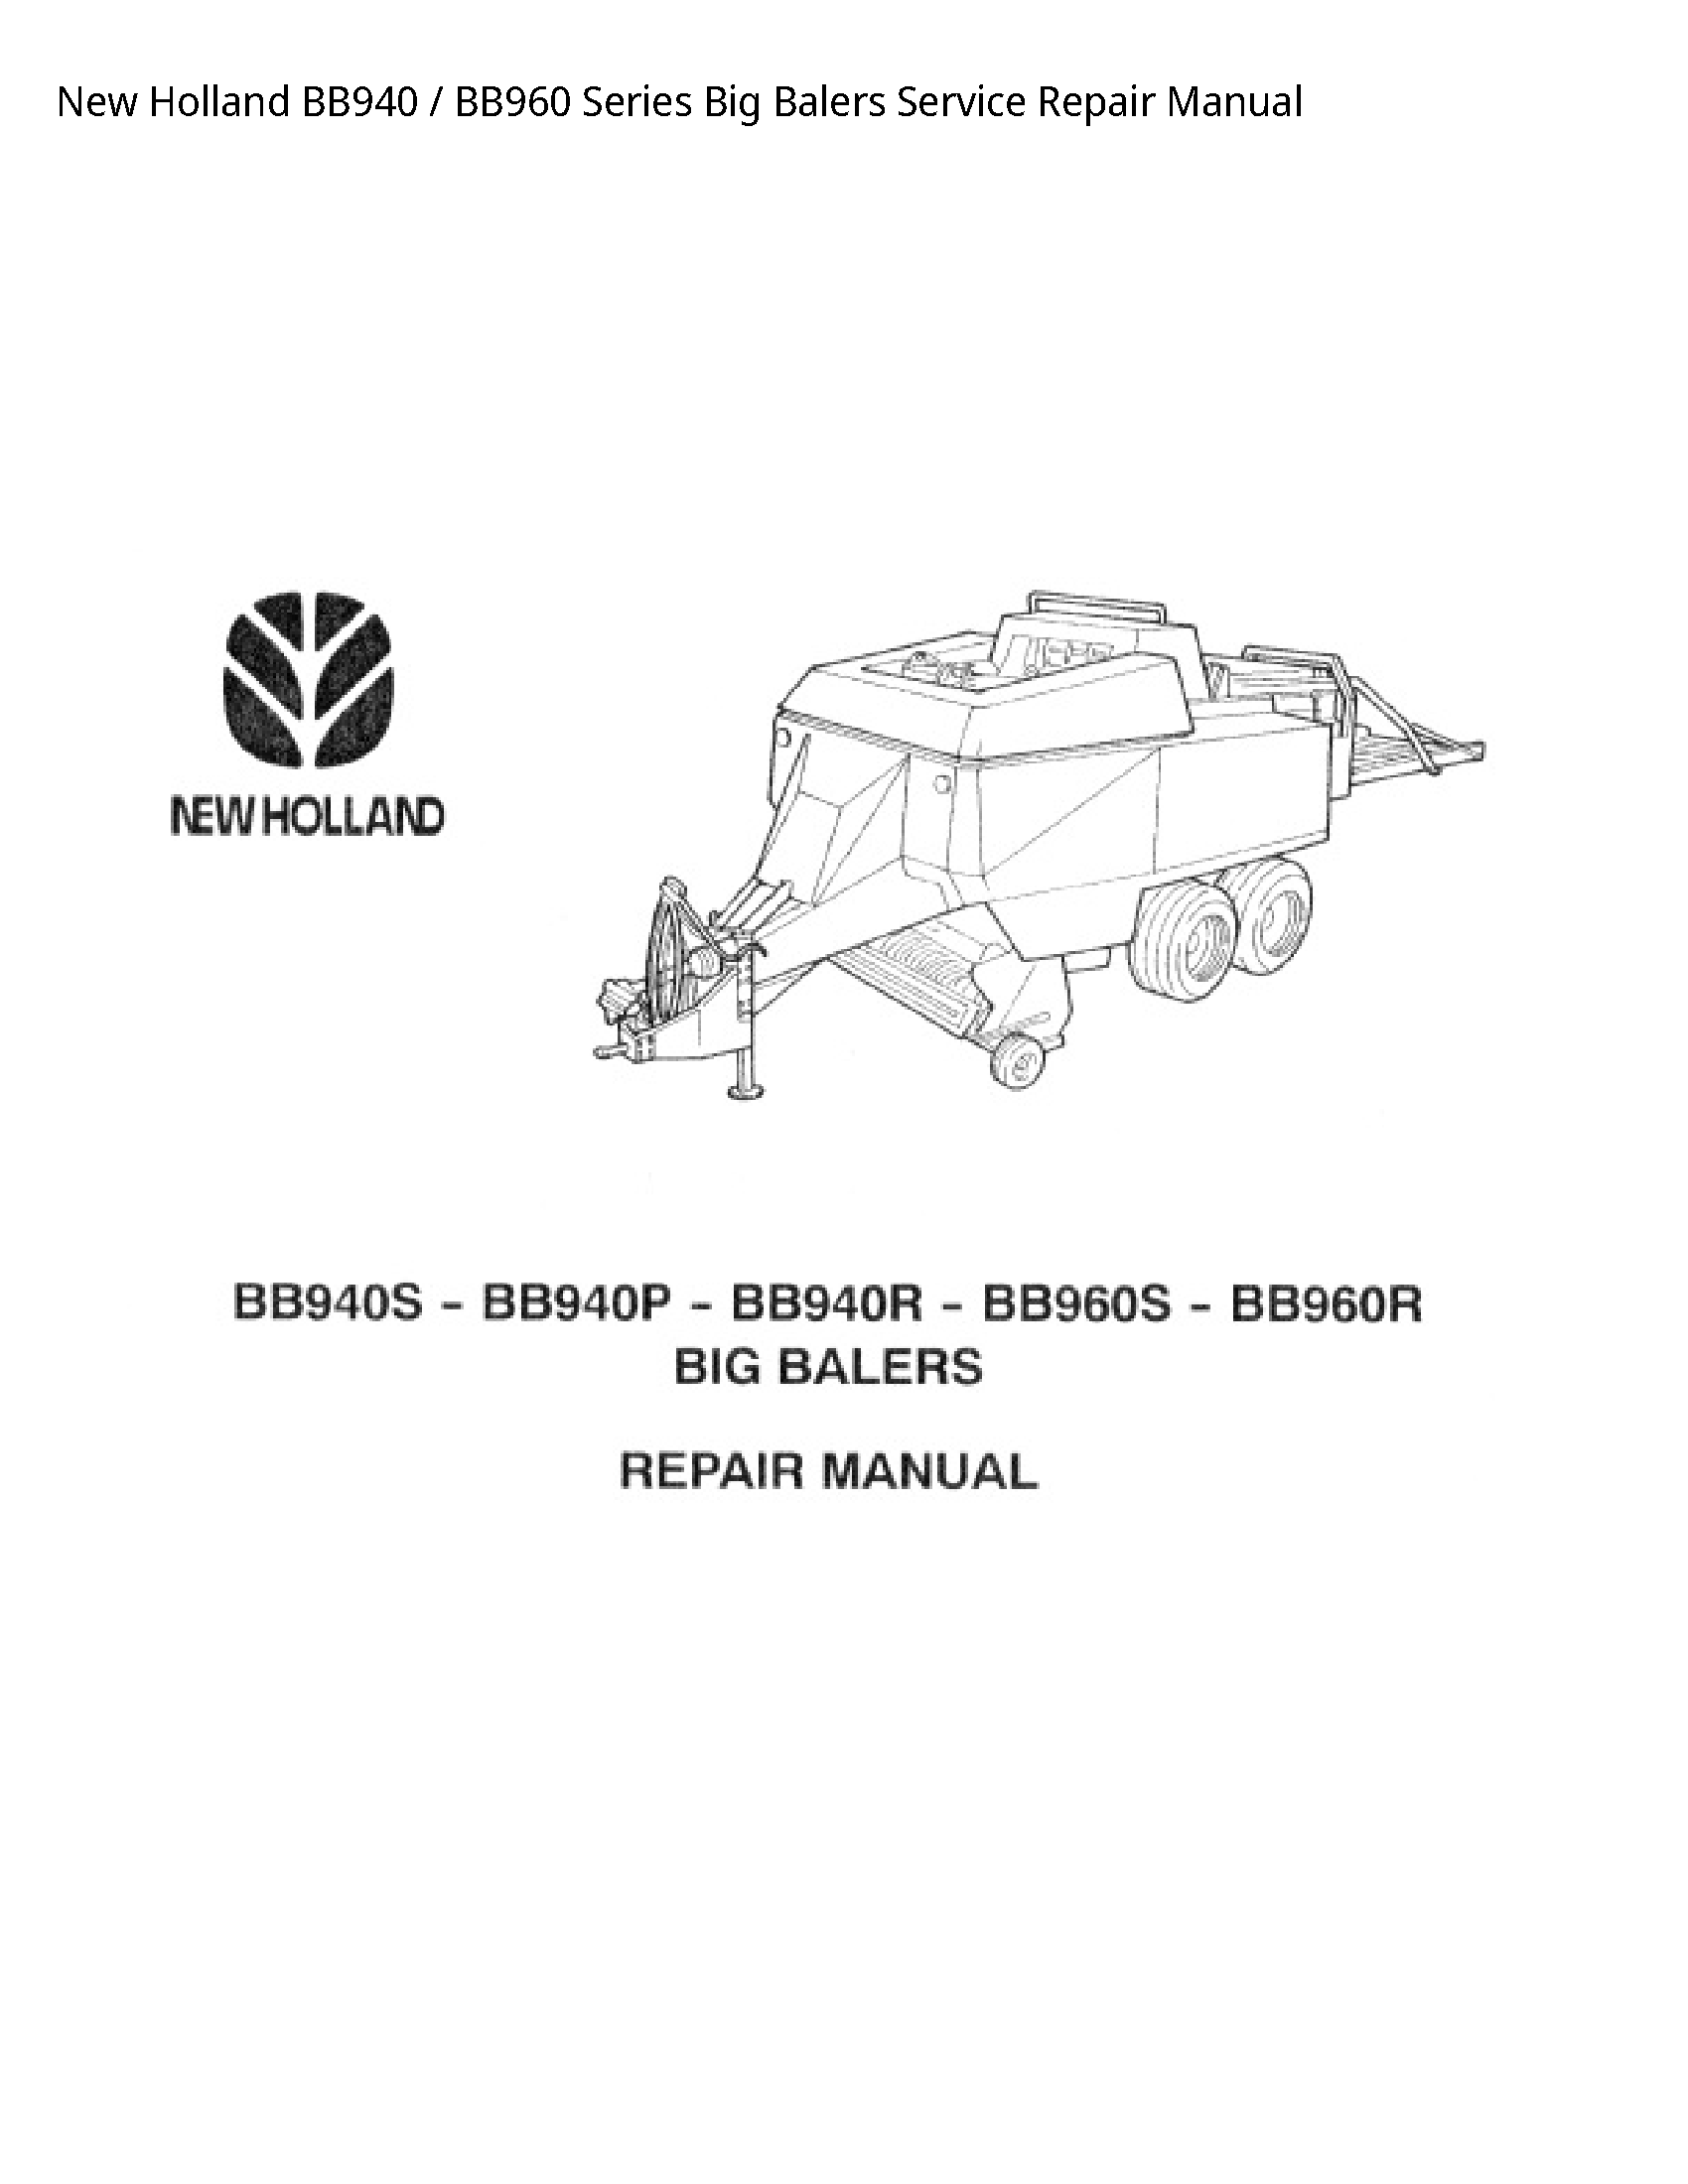 New Holland BB940 Series Big Balers manual